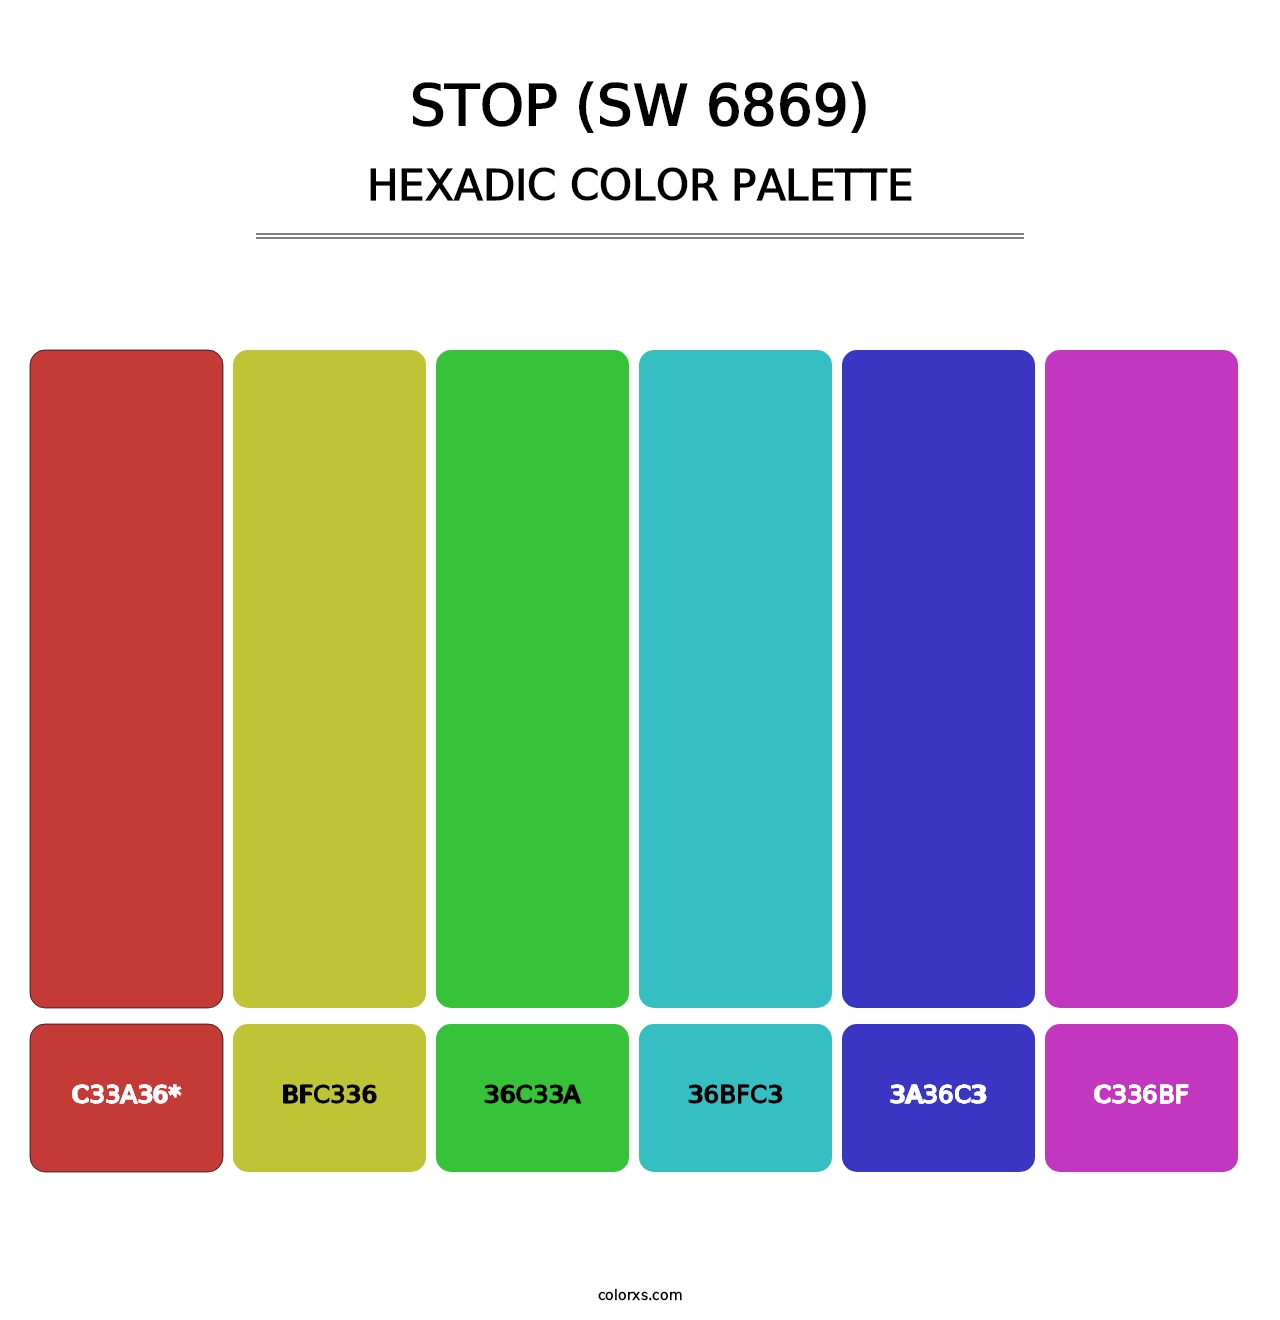 Stop (SW 6869) - Hexadic Color Palette